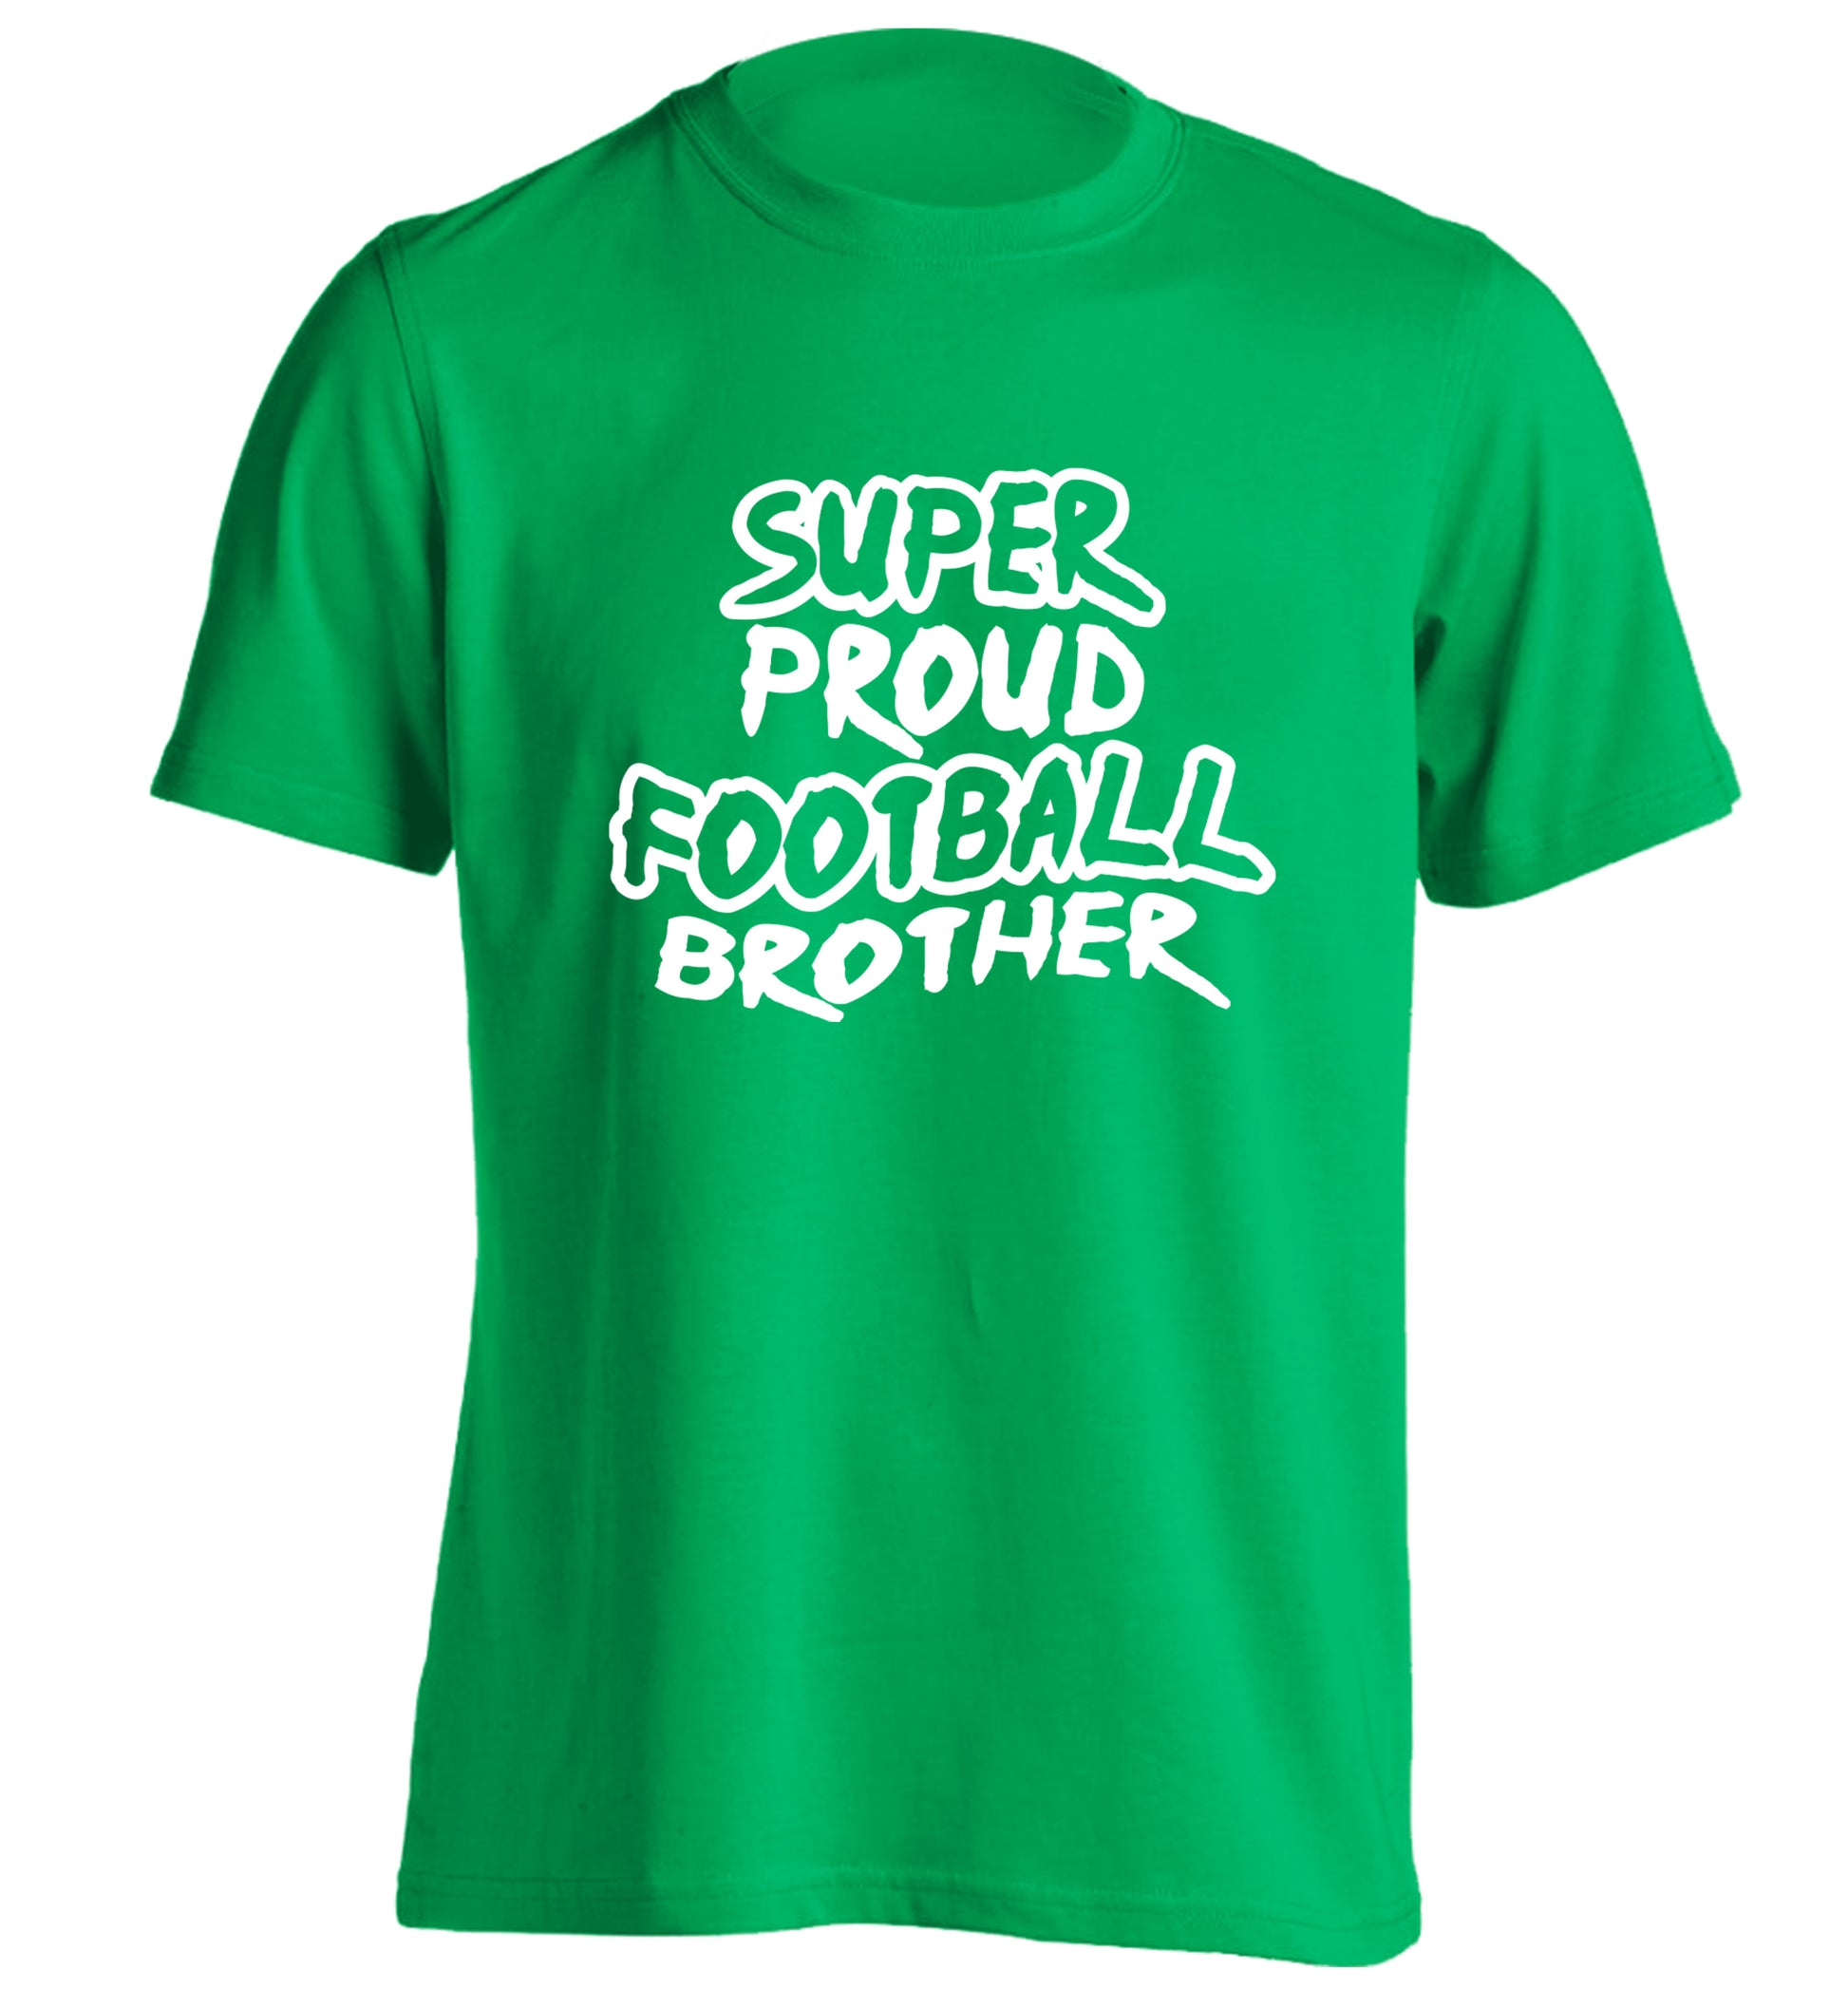 Super proud football brother adults unisexgreen Tshirt 2XL